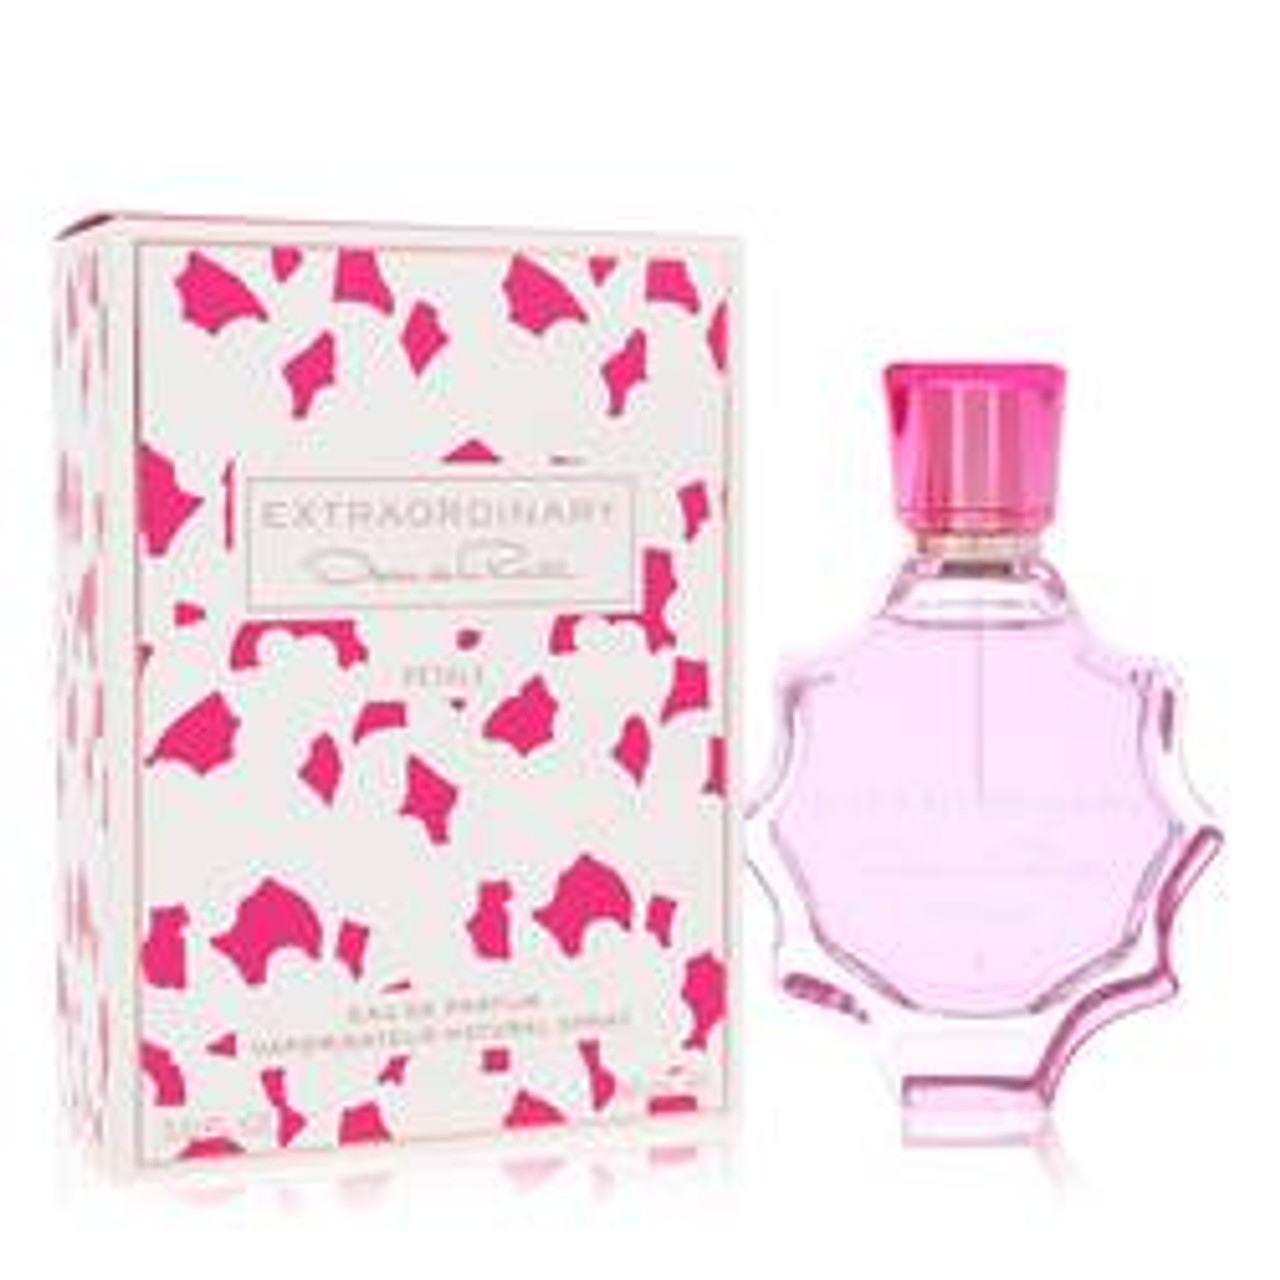 Oscar De La Renta Extraordinary Petale Perfume By Oscar De La Renta Eau De Parfum Spray 3 oz for Women - [From 63.00 - Choose pk Qty ] - *Ships from Miami